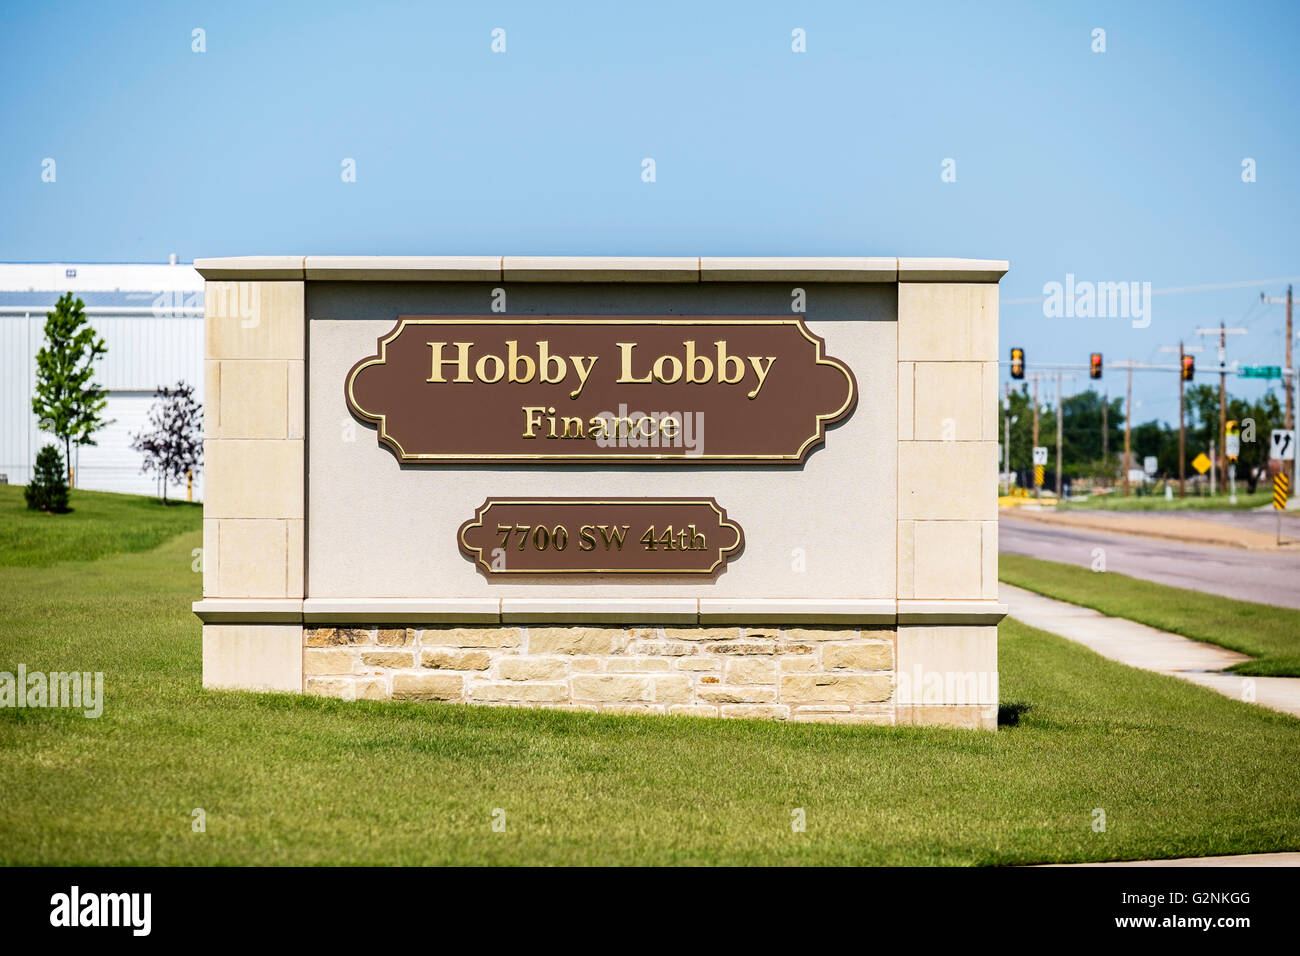 Hobby Lobby Denkmal Zeichen Werbung der Finanzabteilung bei 7707 SW 44th Street, Oklahoma City, Oklahoma, USA. Stockfoto